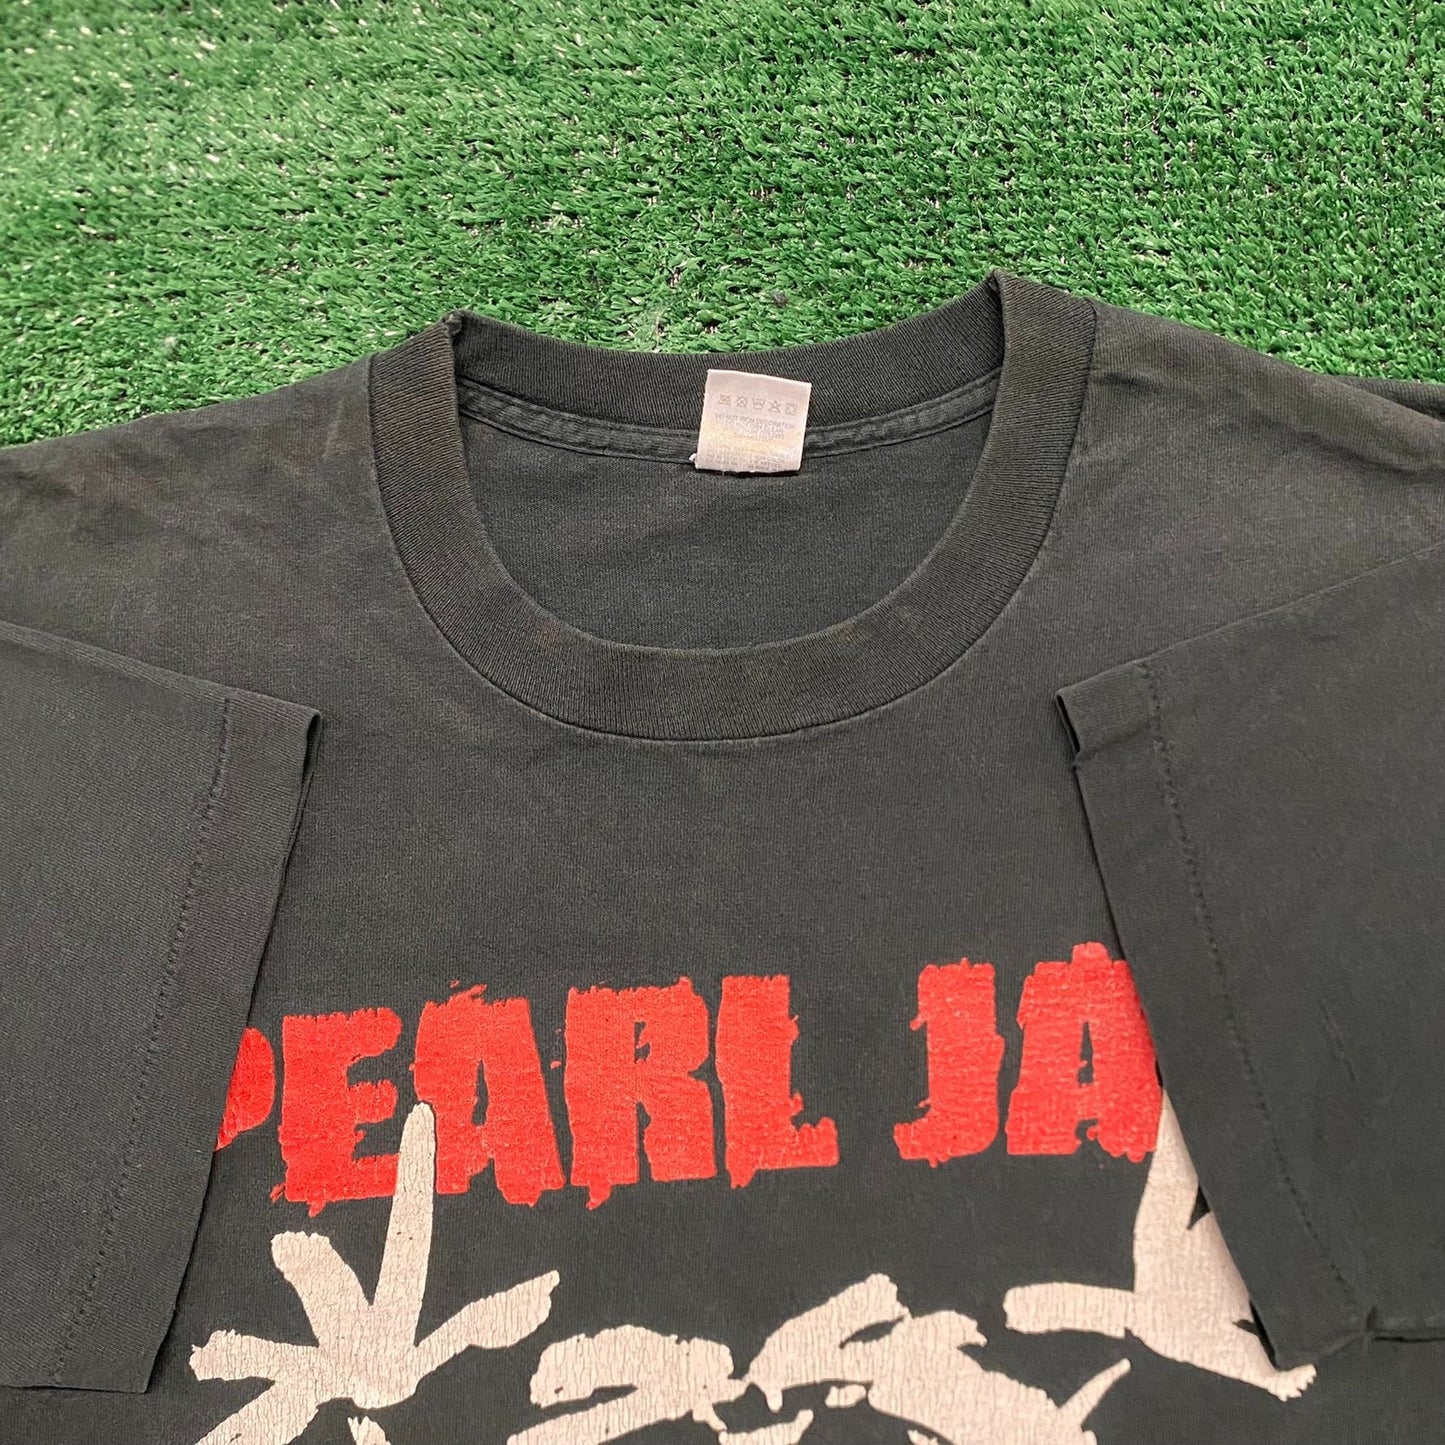 Vintage 90s Essential Pearl Jam Alive Grunge Band T-Shirt